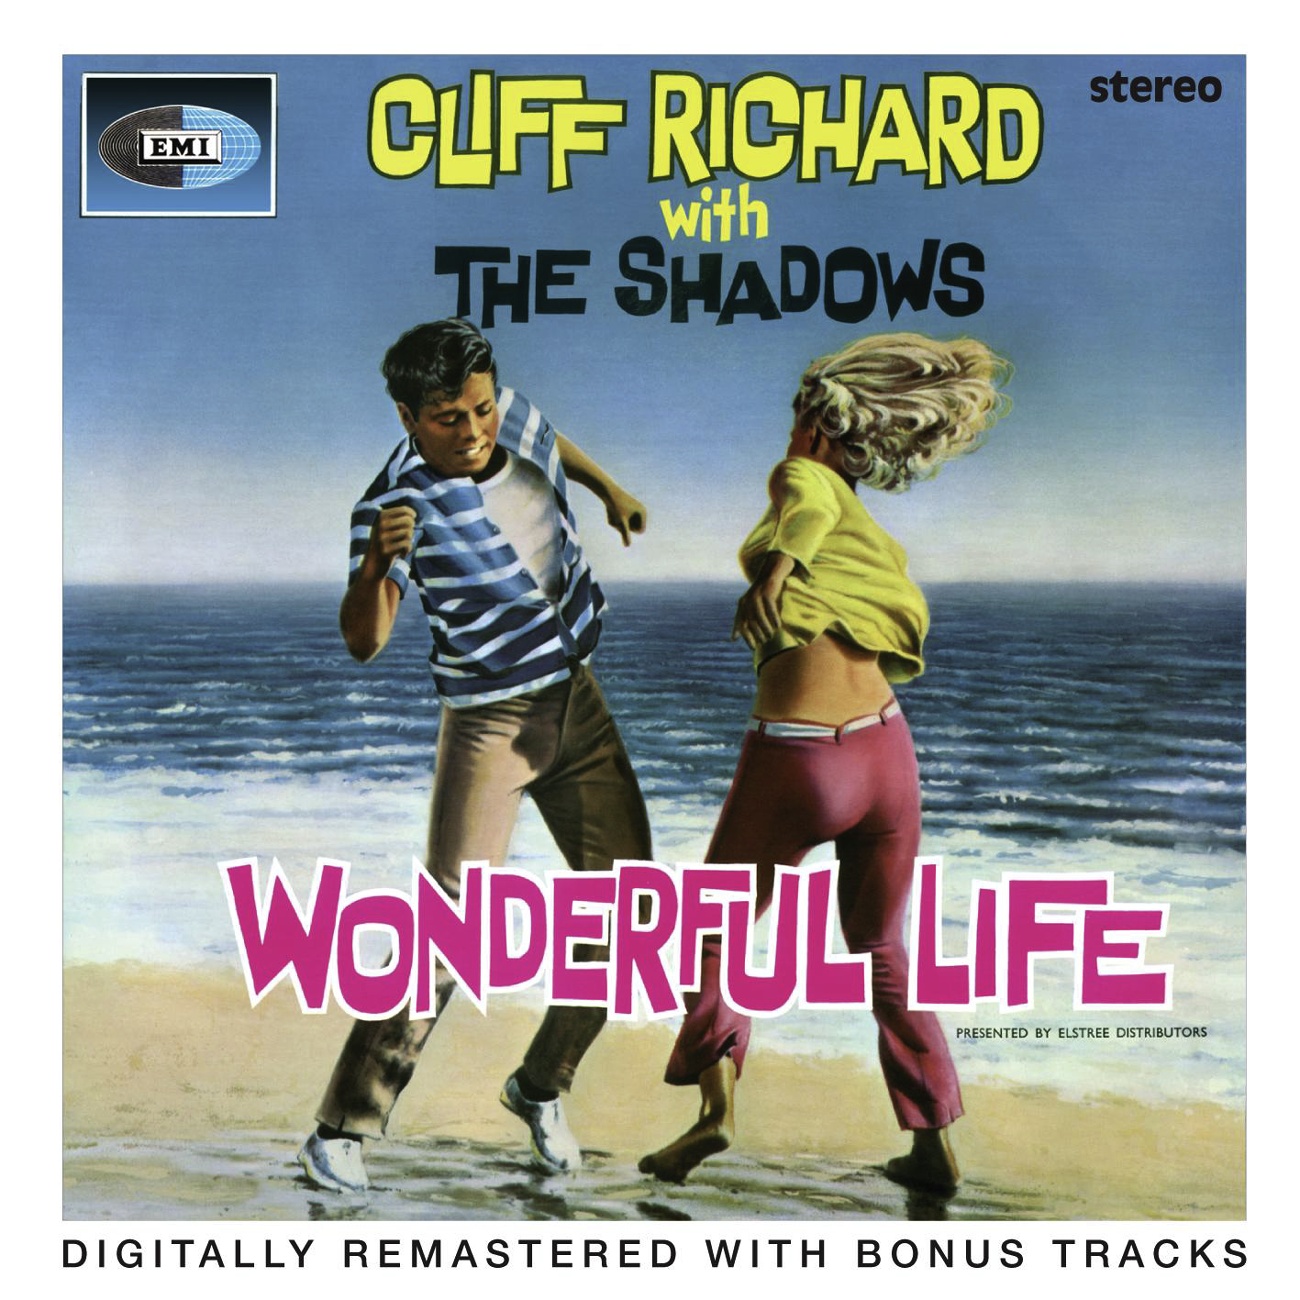 Wonderful Life (Alternate Version) (2005 Digital Remaster)